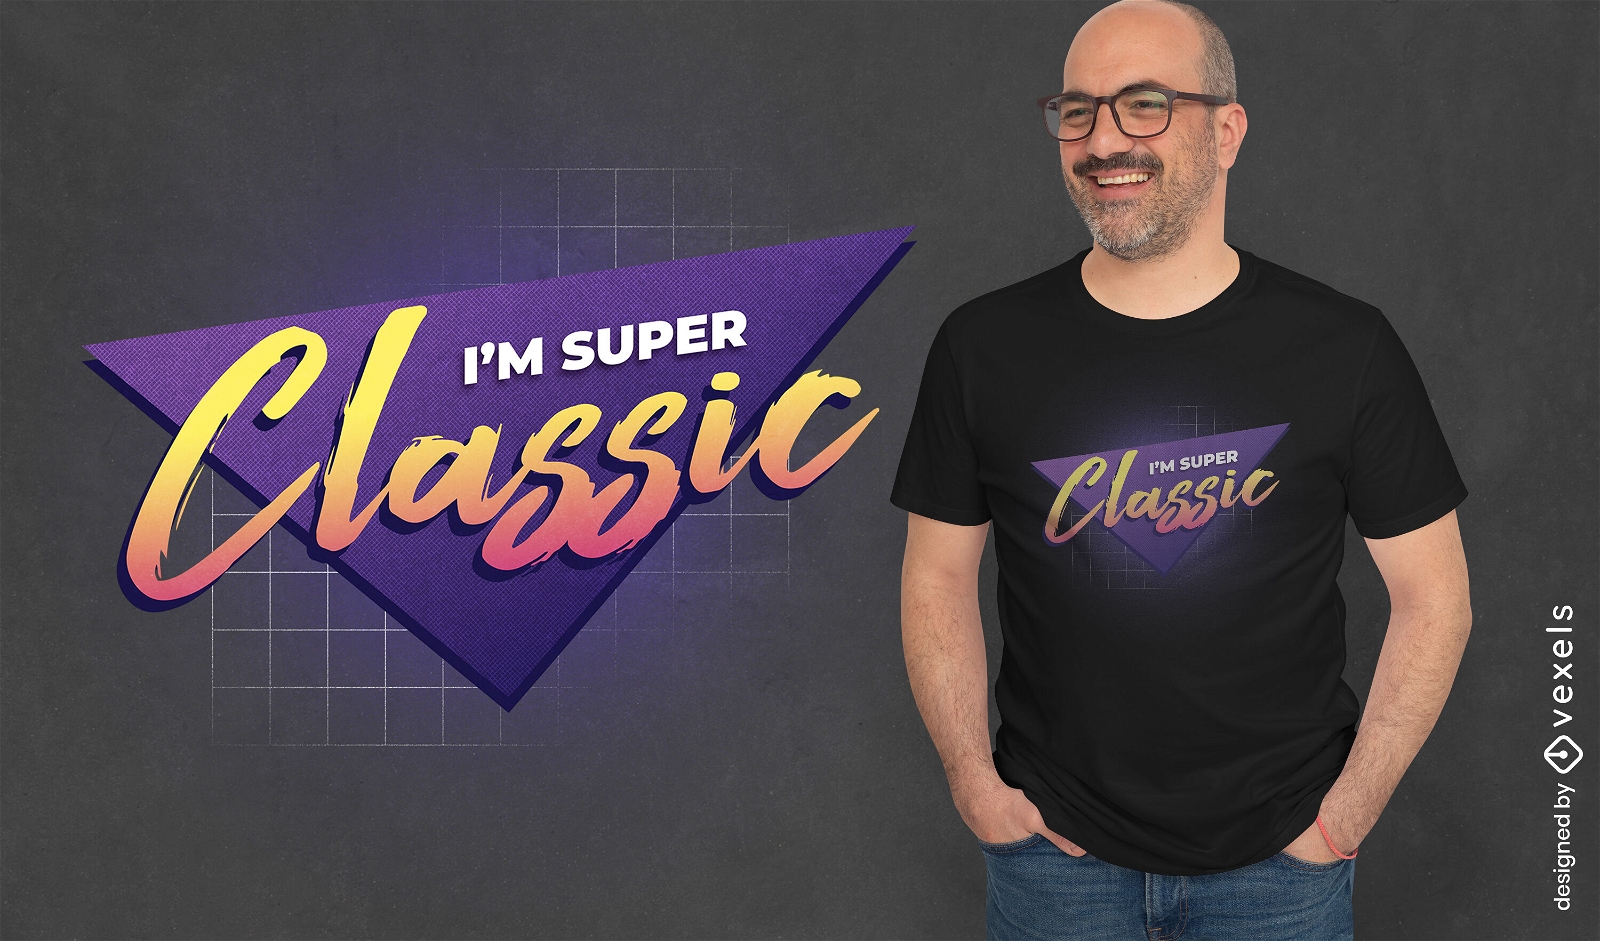 I'm super classic t-shirt design